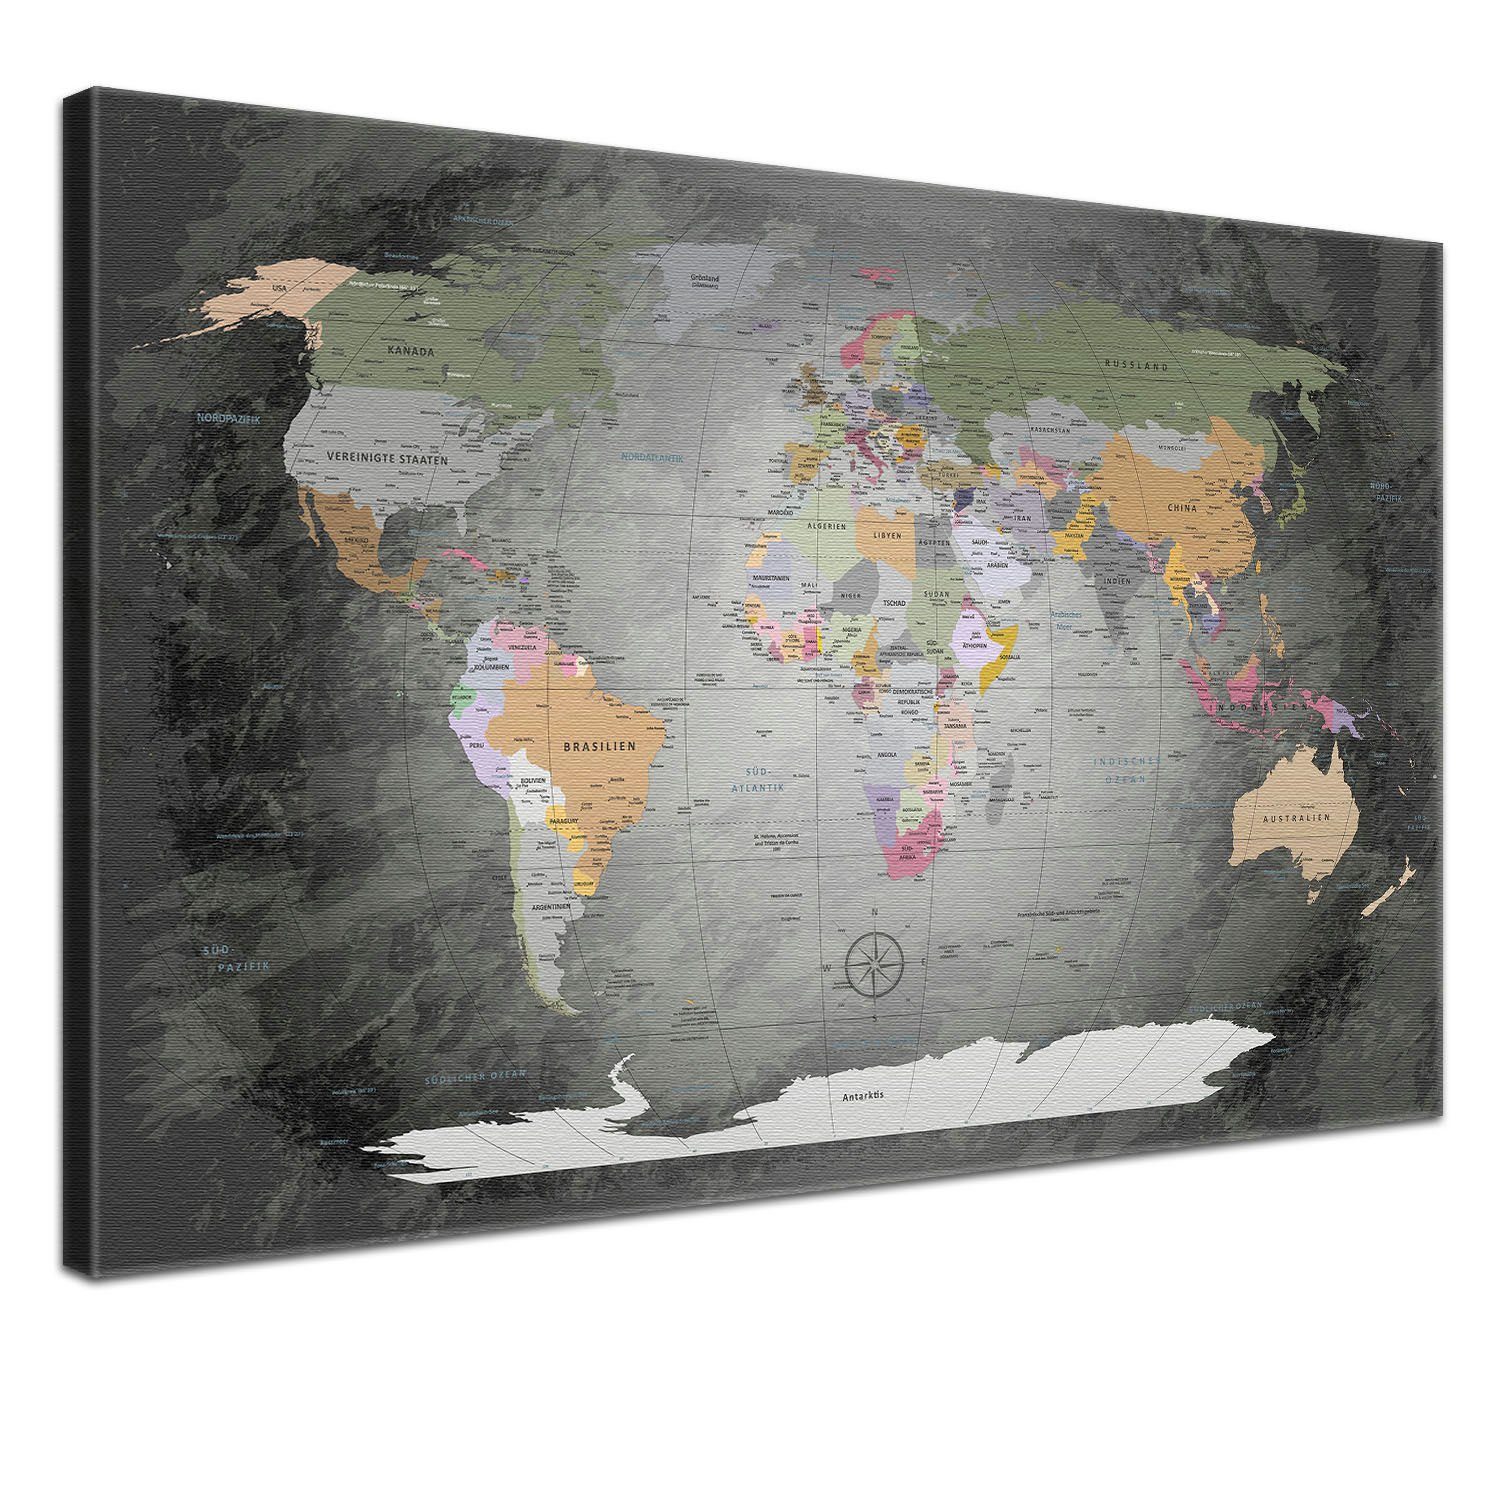 LANA KK Leinwandbild Weltkarte Pinnwand zum markieren von Reisezielen, deutsche Beschriftung Edelgrau